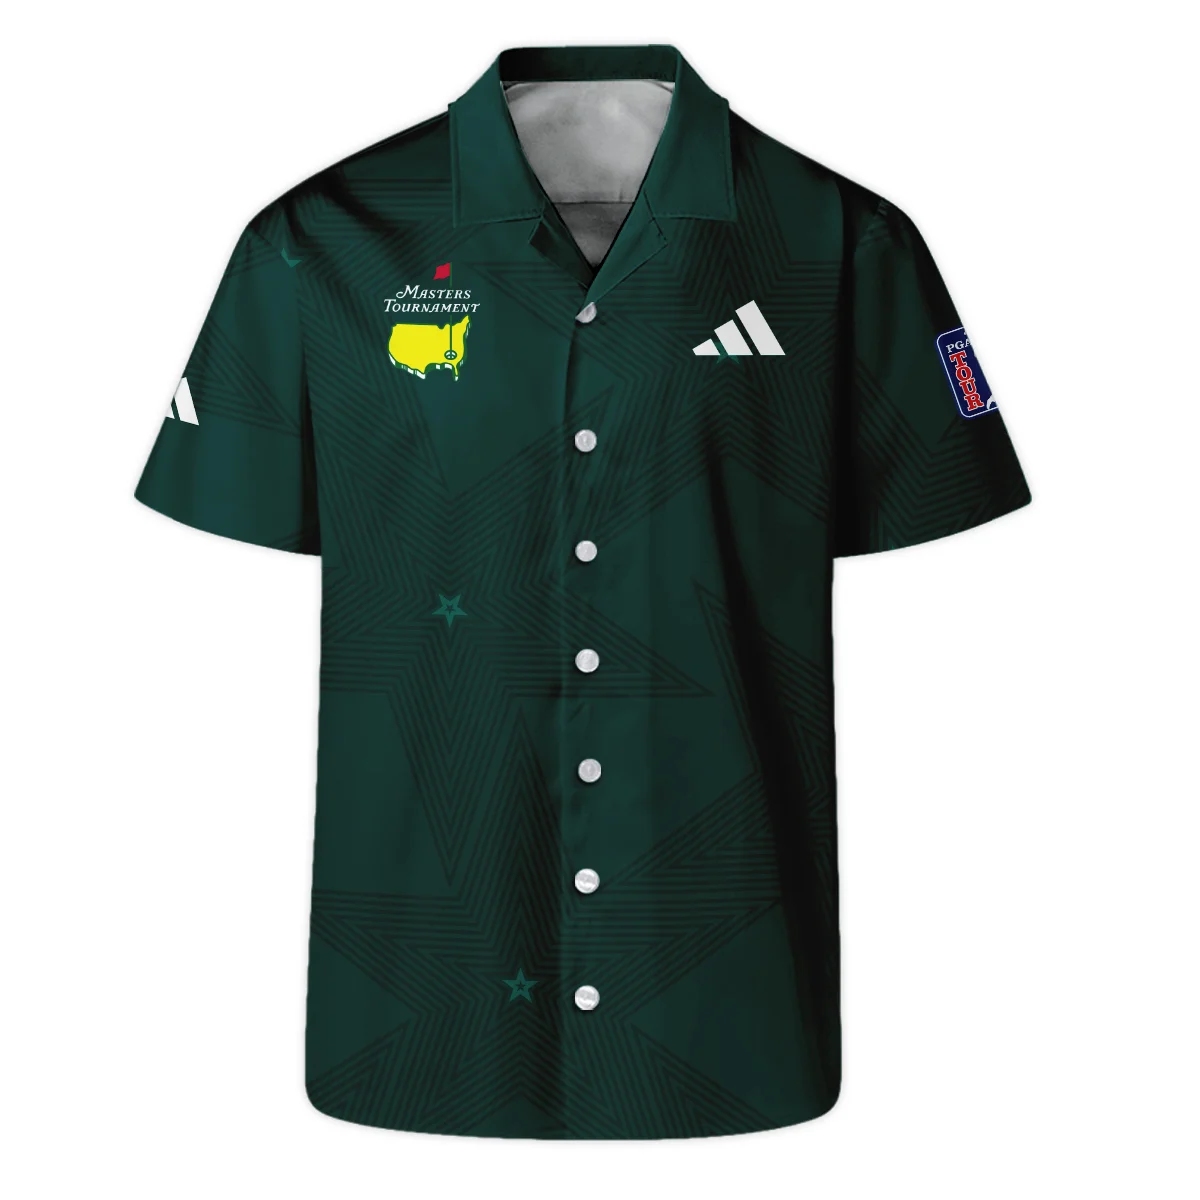 Golf Pattern Stars Dark Green Masters Tournament Adidas Polo Shirt Style Classic Polo Shirt For Men